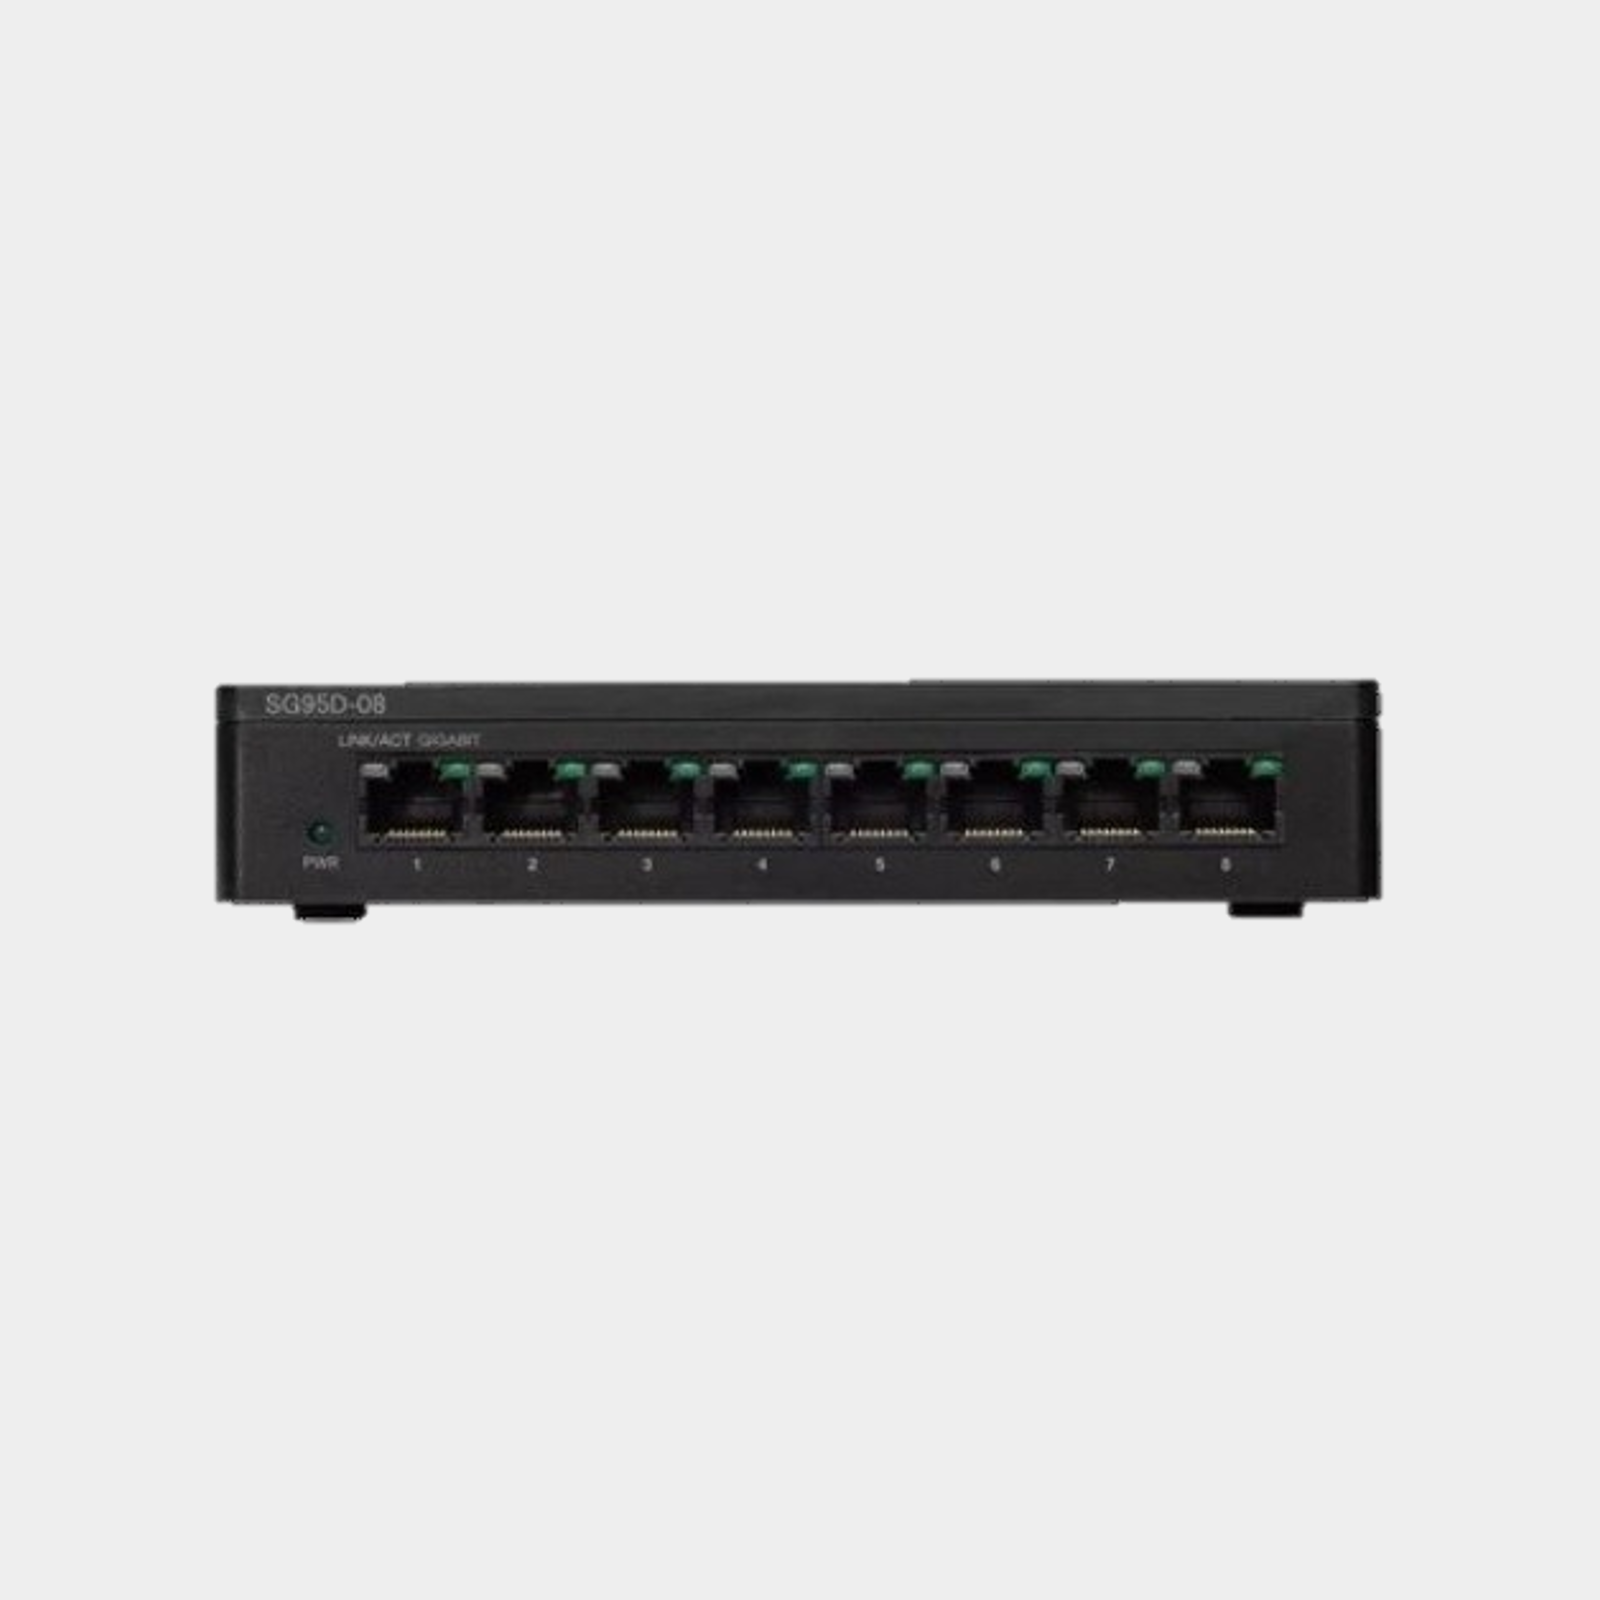 Cisco SG95D 8-Port Gigabit Desktop Switch (SG95D-08-AS)